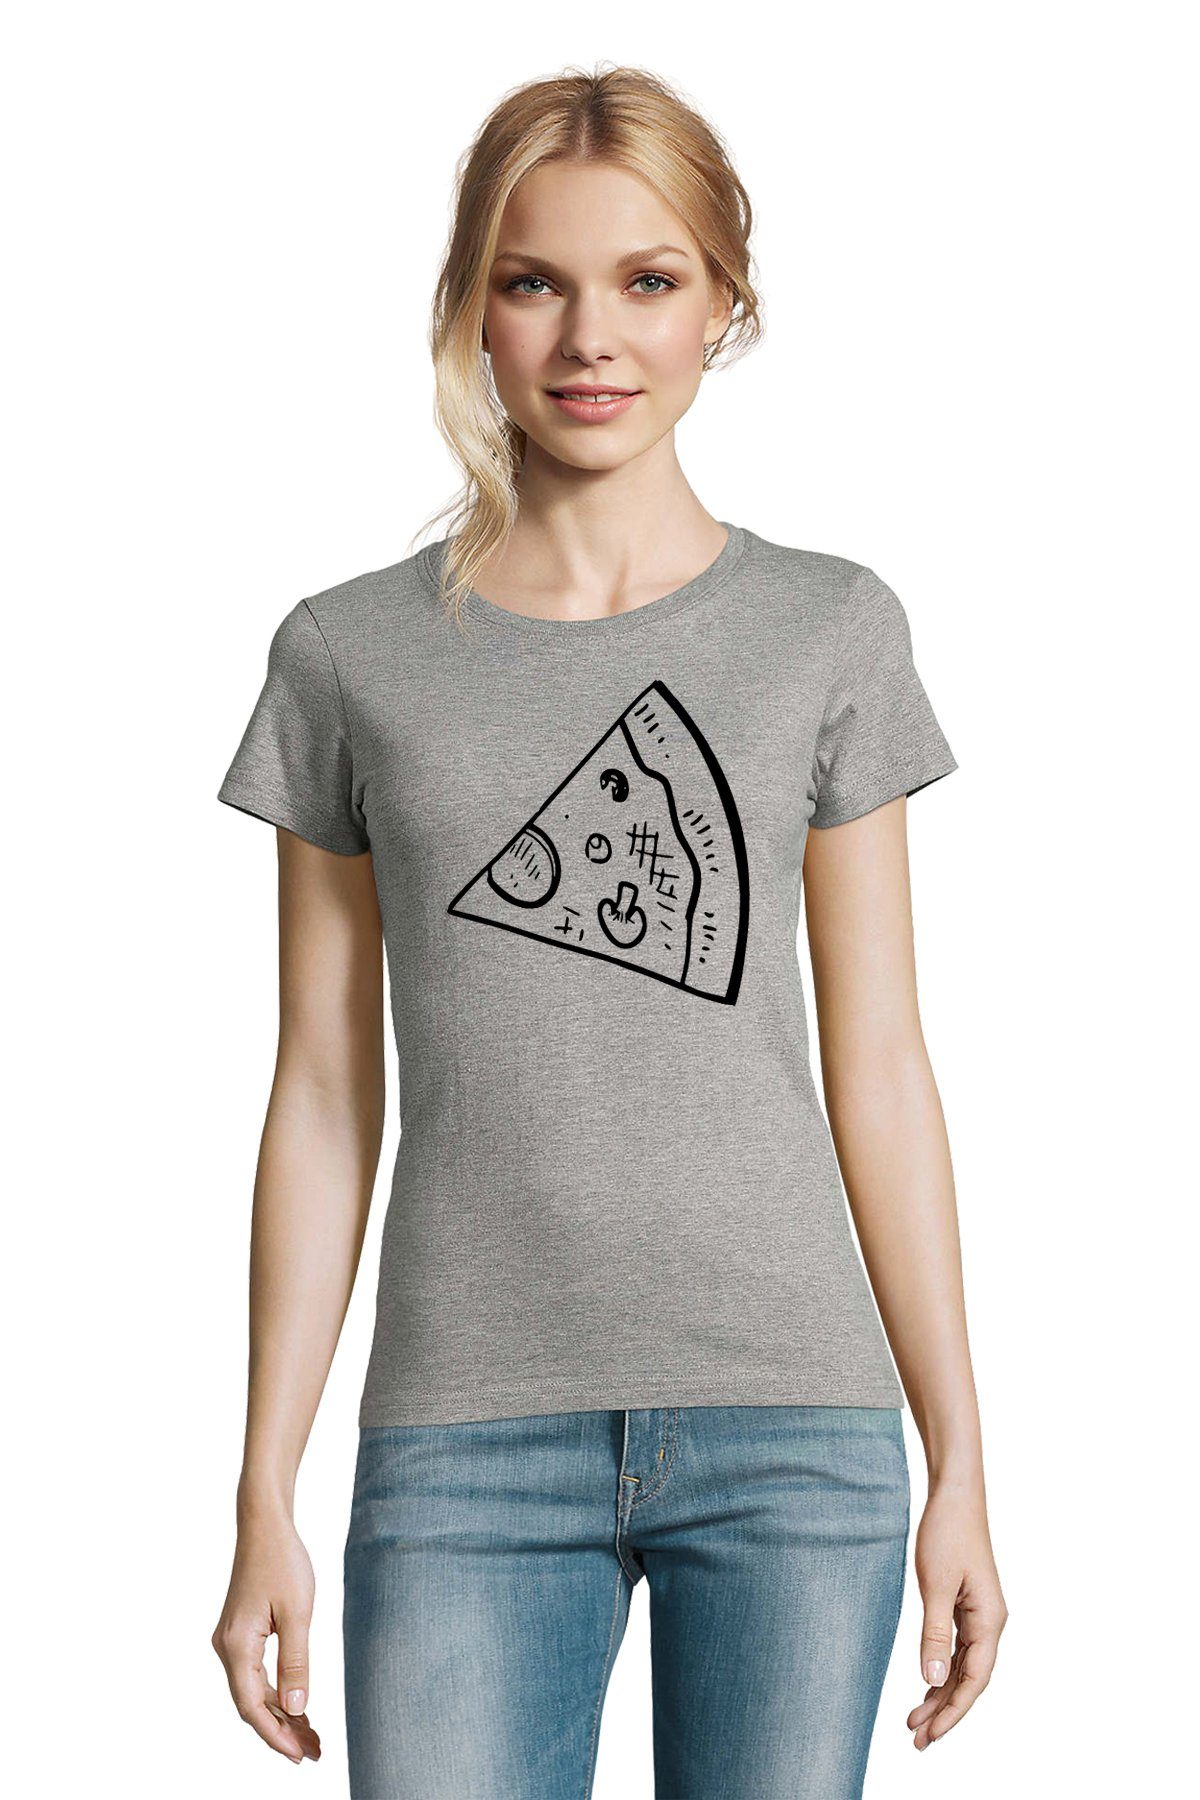 Blondie Pizza Stück Partner Damen Grau T-Shirt Valentin Shirt Pärchen & Friends Brownie BFF